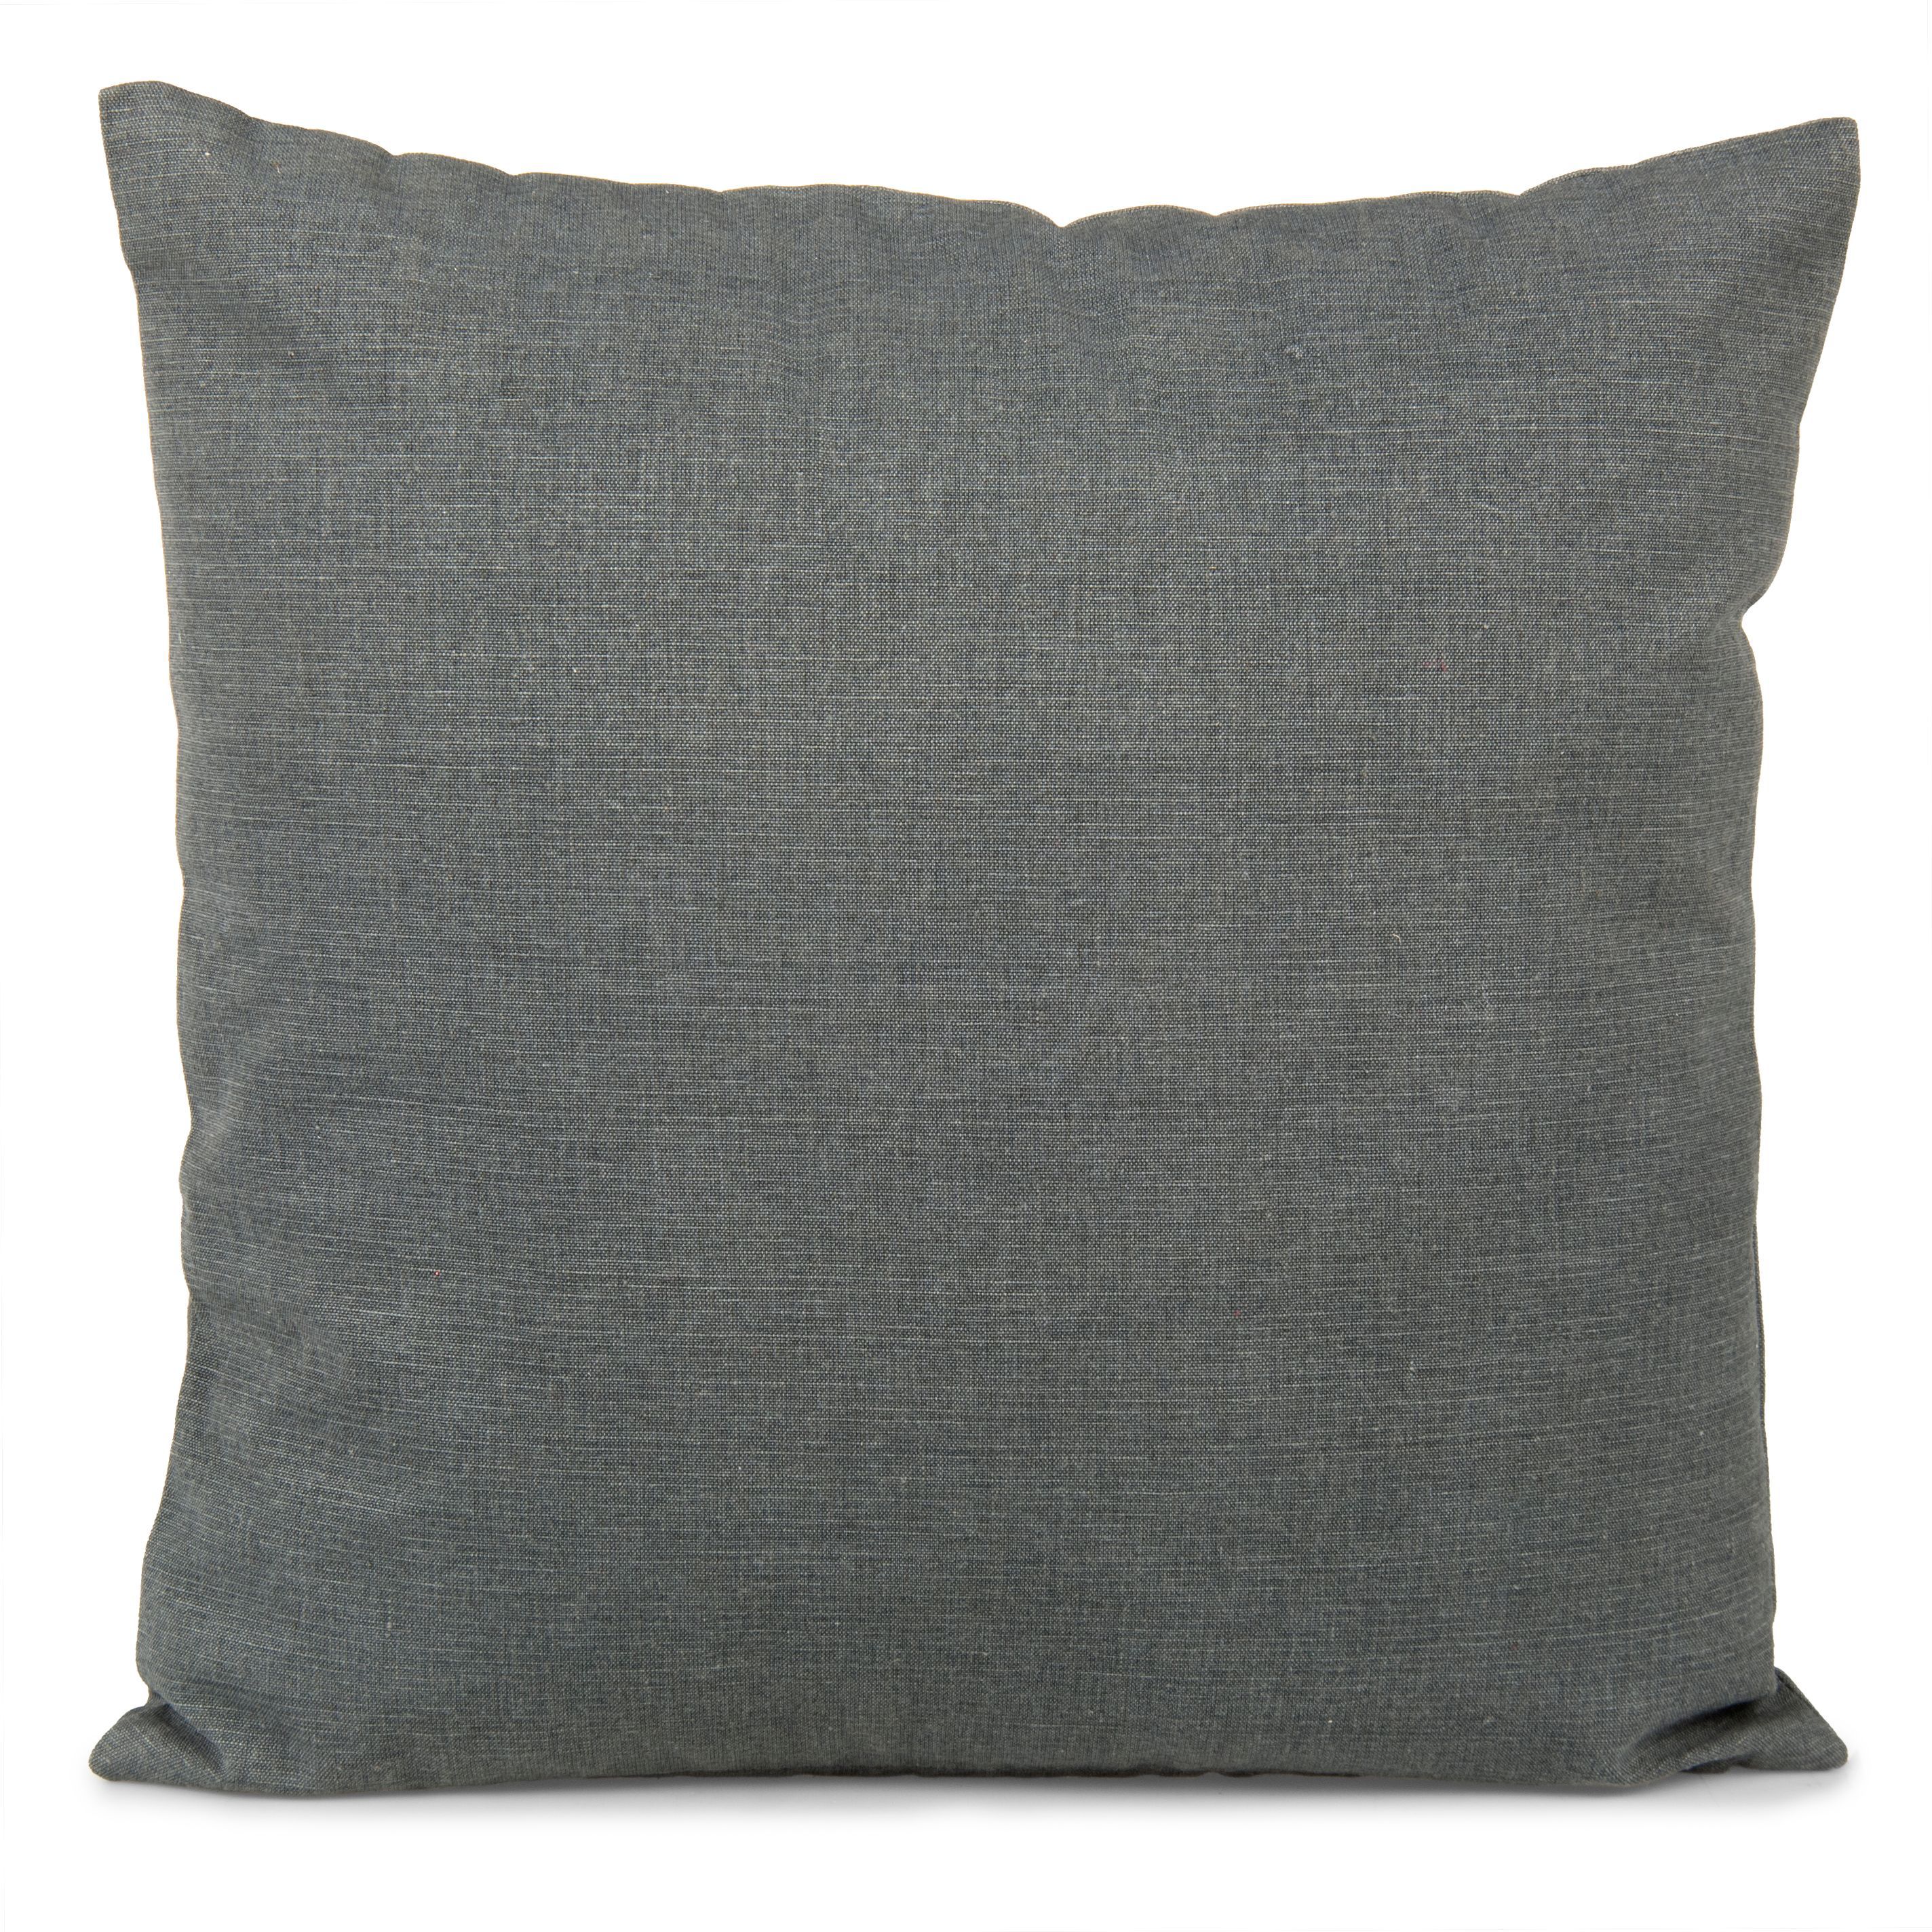 Brysa Sac de Sel Mid grey Cushion | Departments | DIY at B&Q